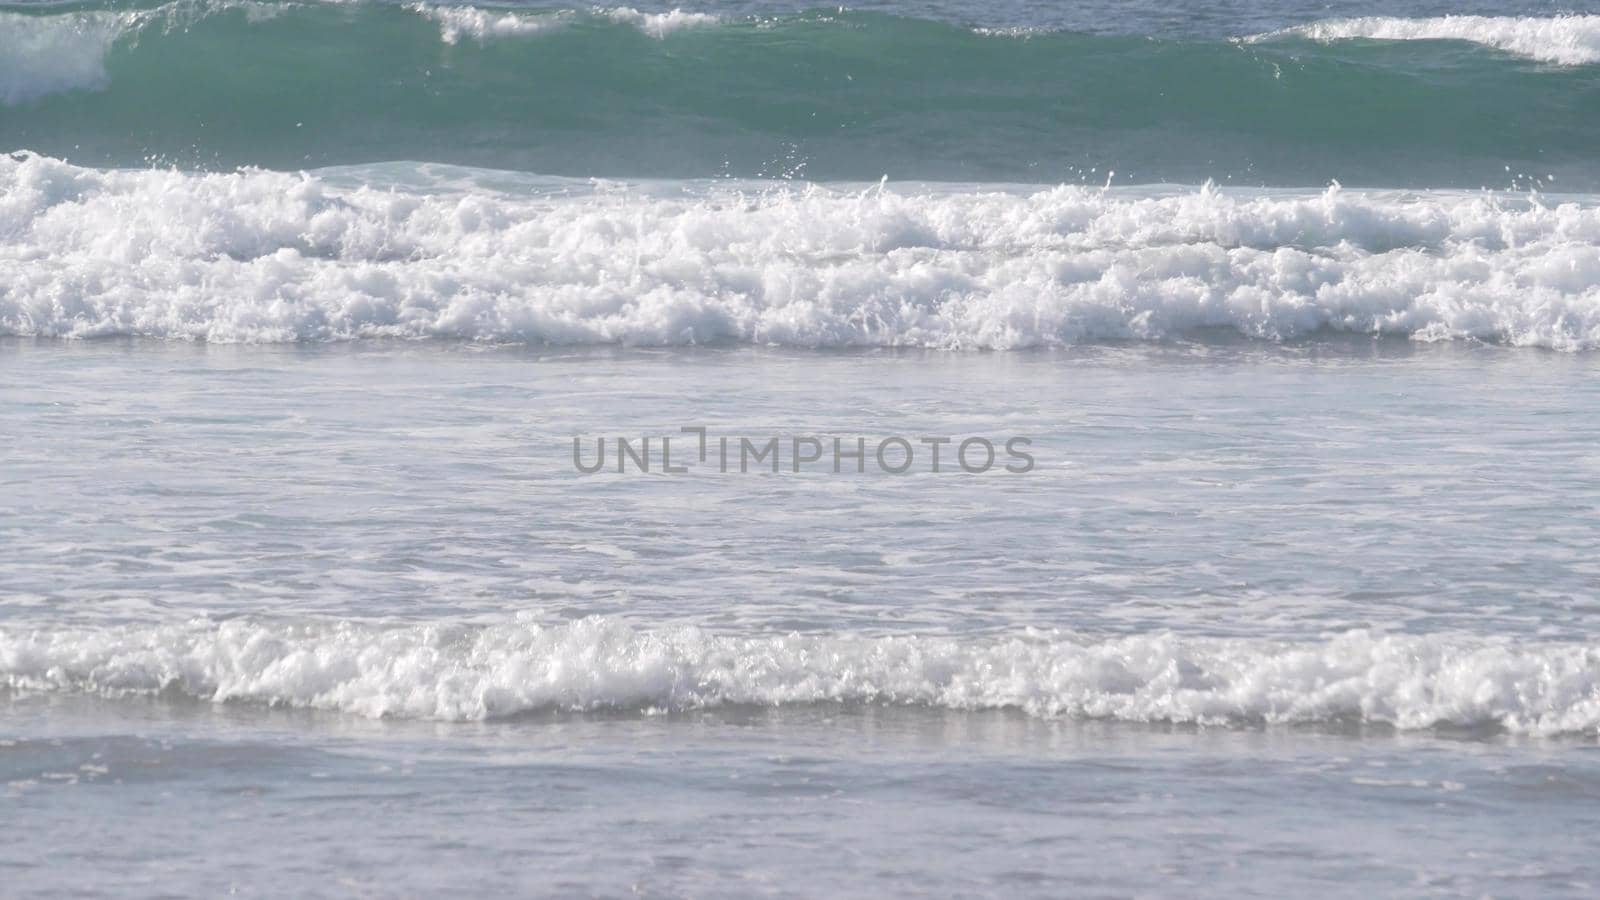 Big blue ocean waves crashing on beach, California pacific coast, USA. Sea water by DogoraSun